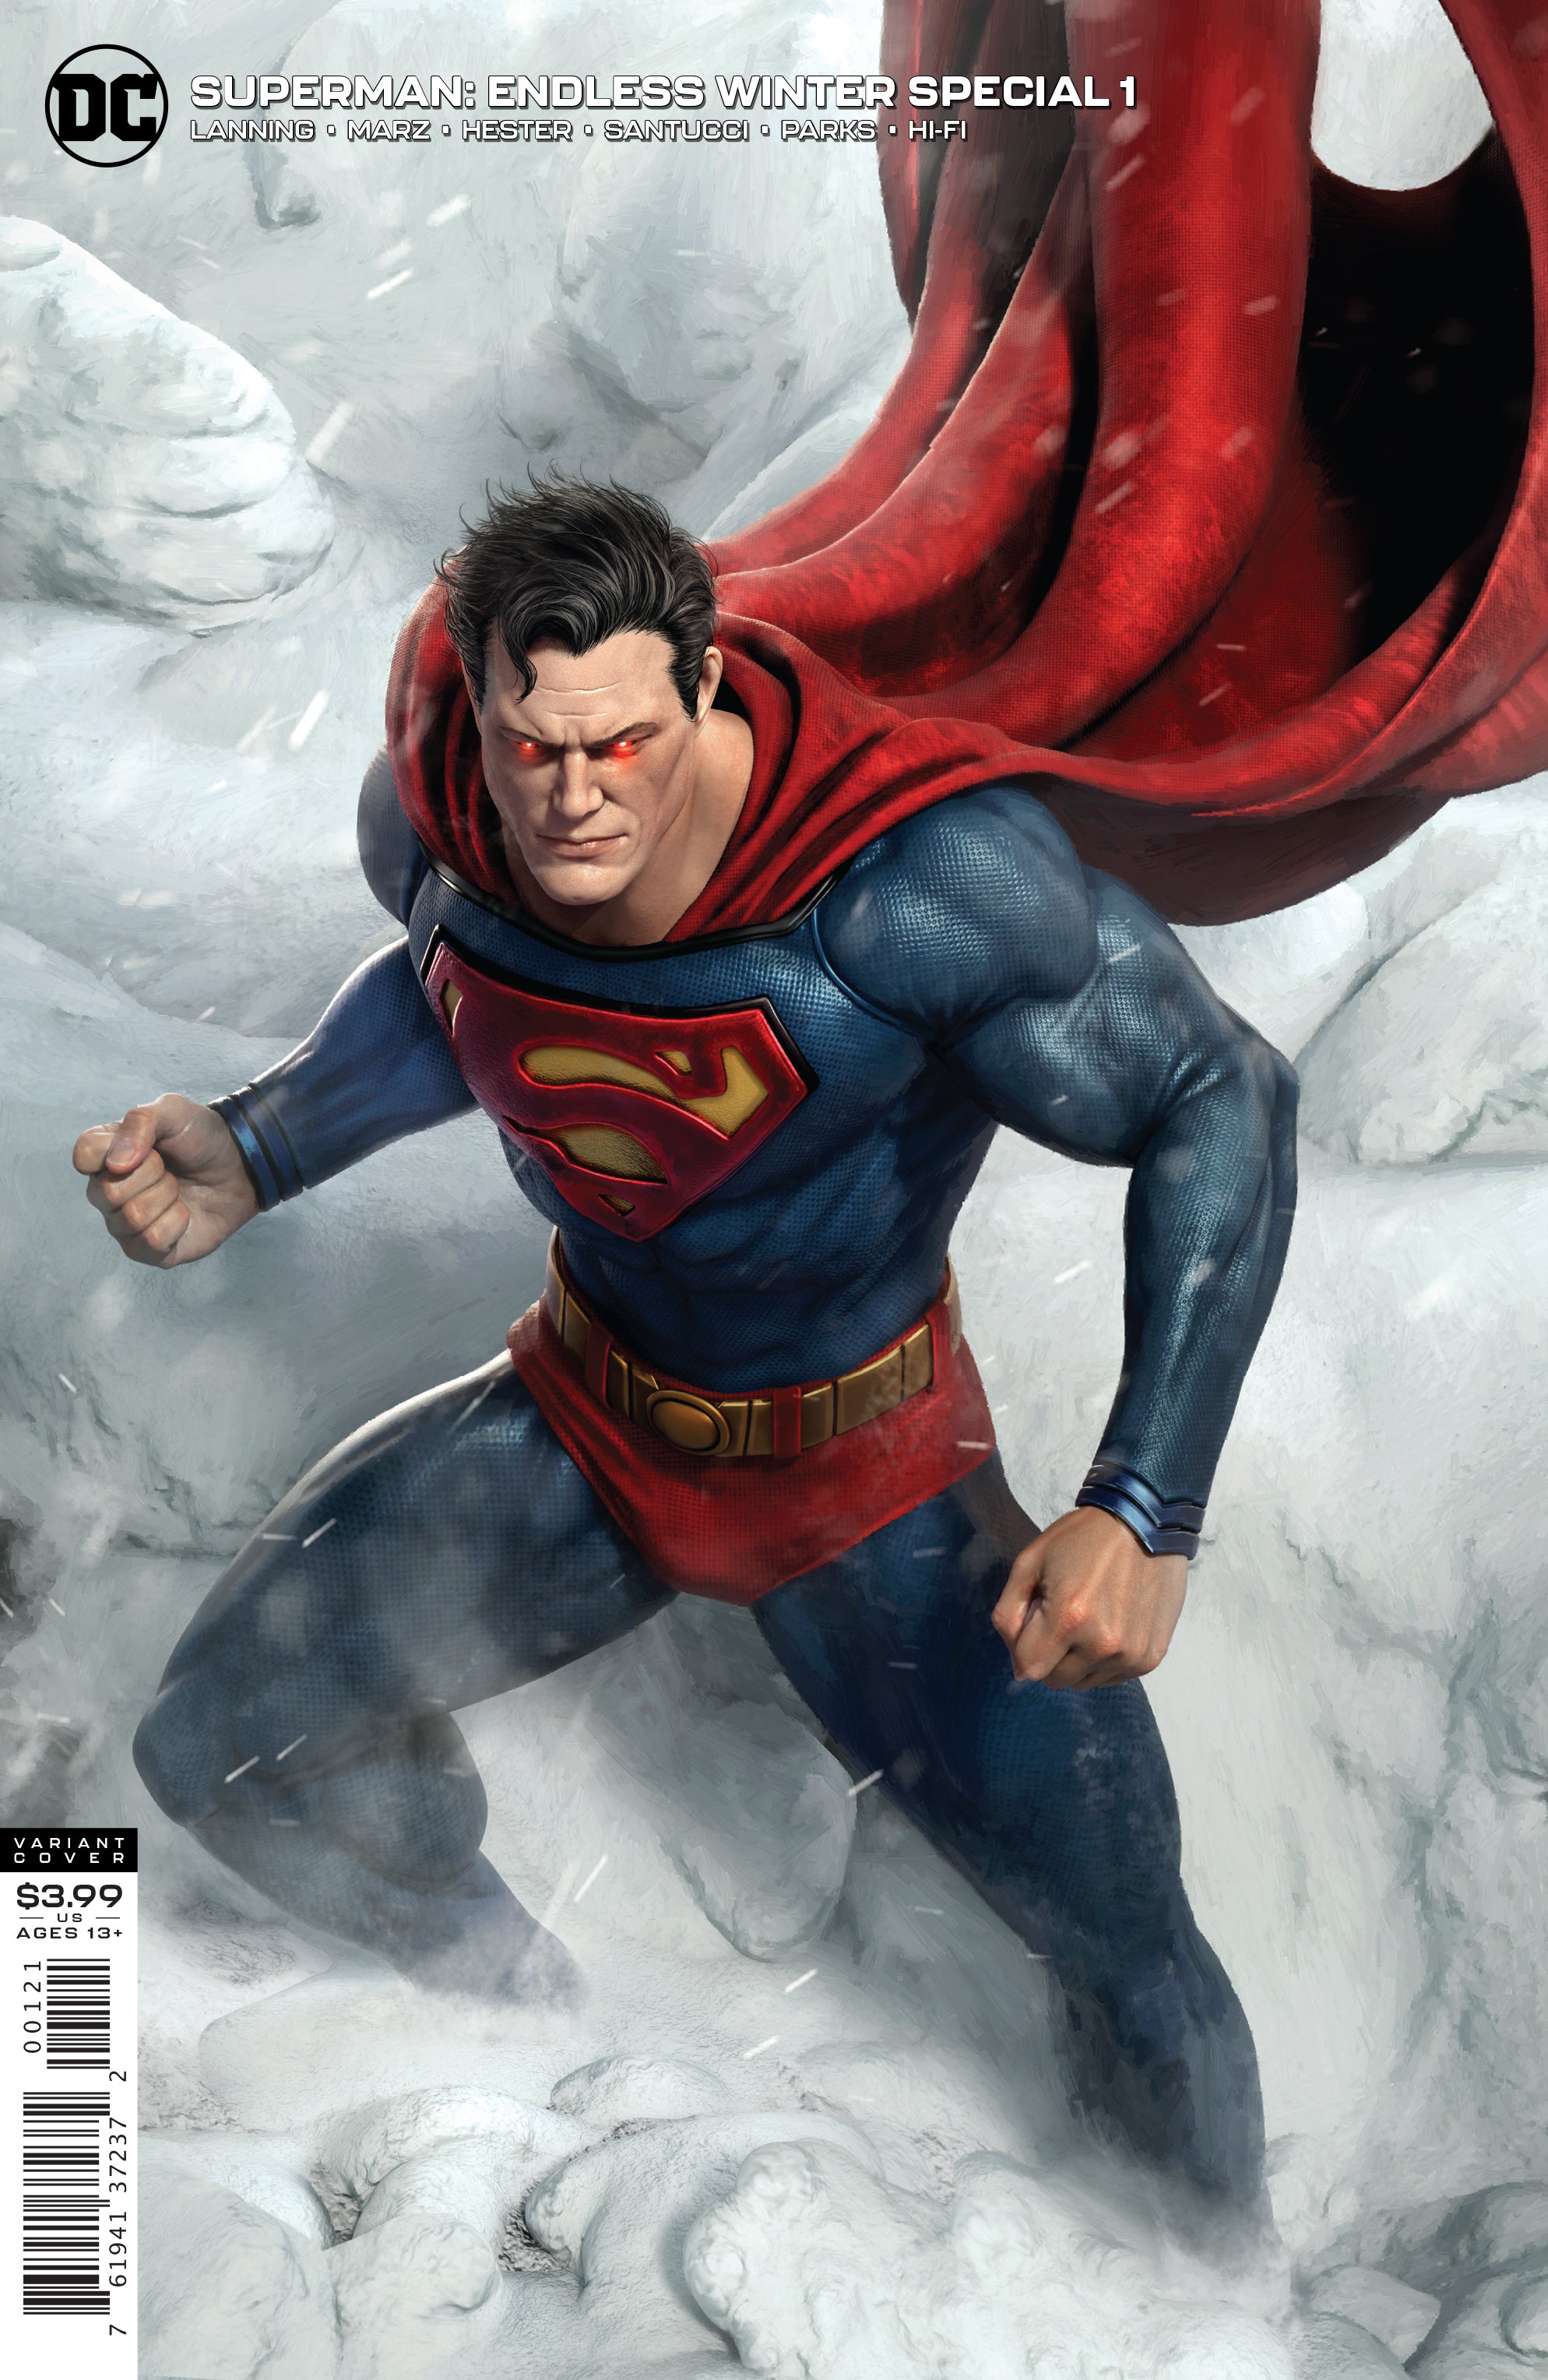 SUPERMAN ENDLESS WINTER SPECIAL #1 (ONE SHOT) CVR B RAFAEL G